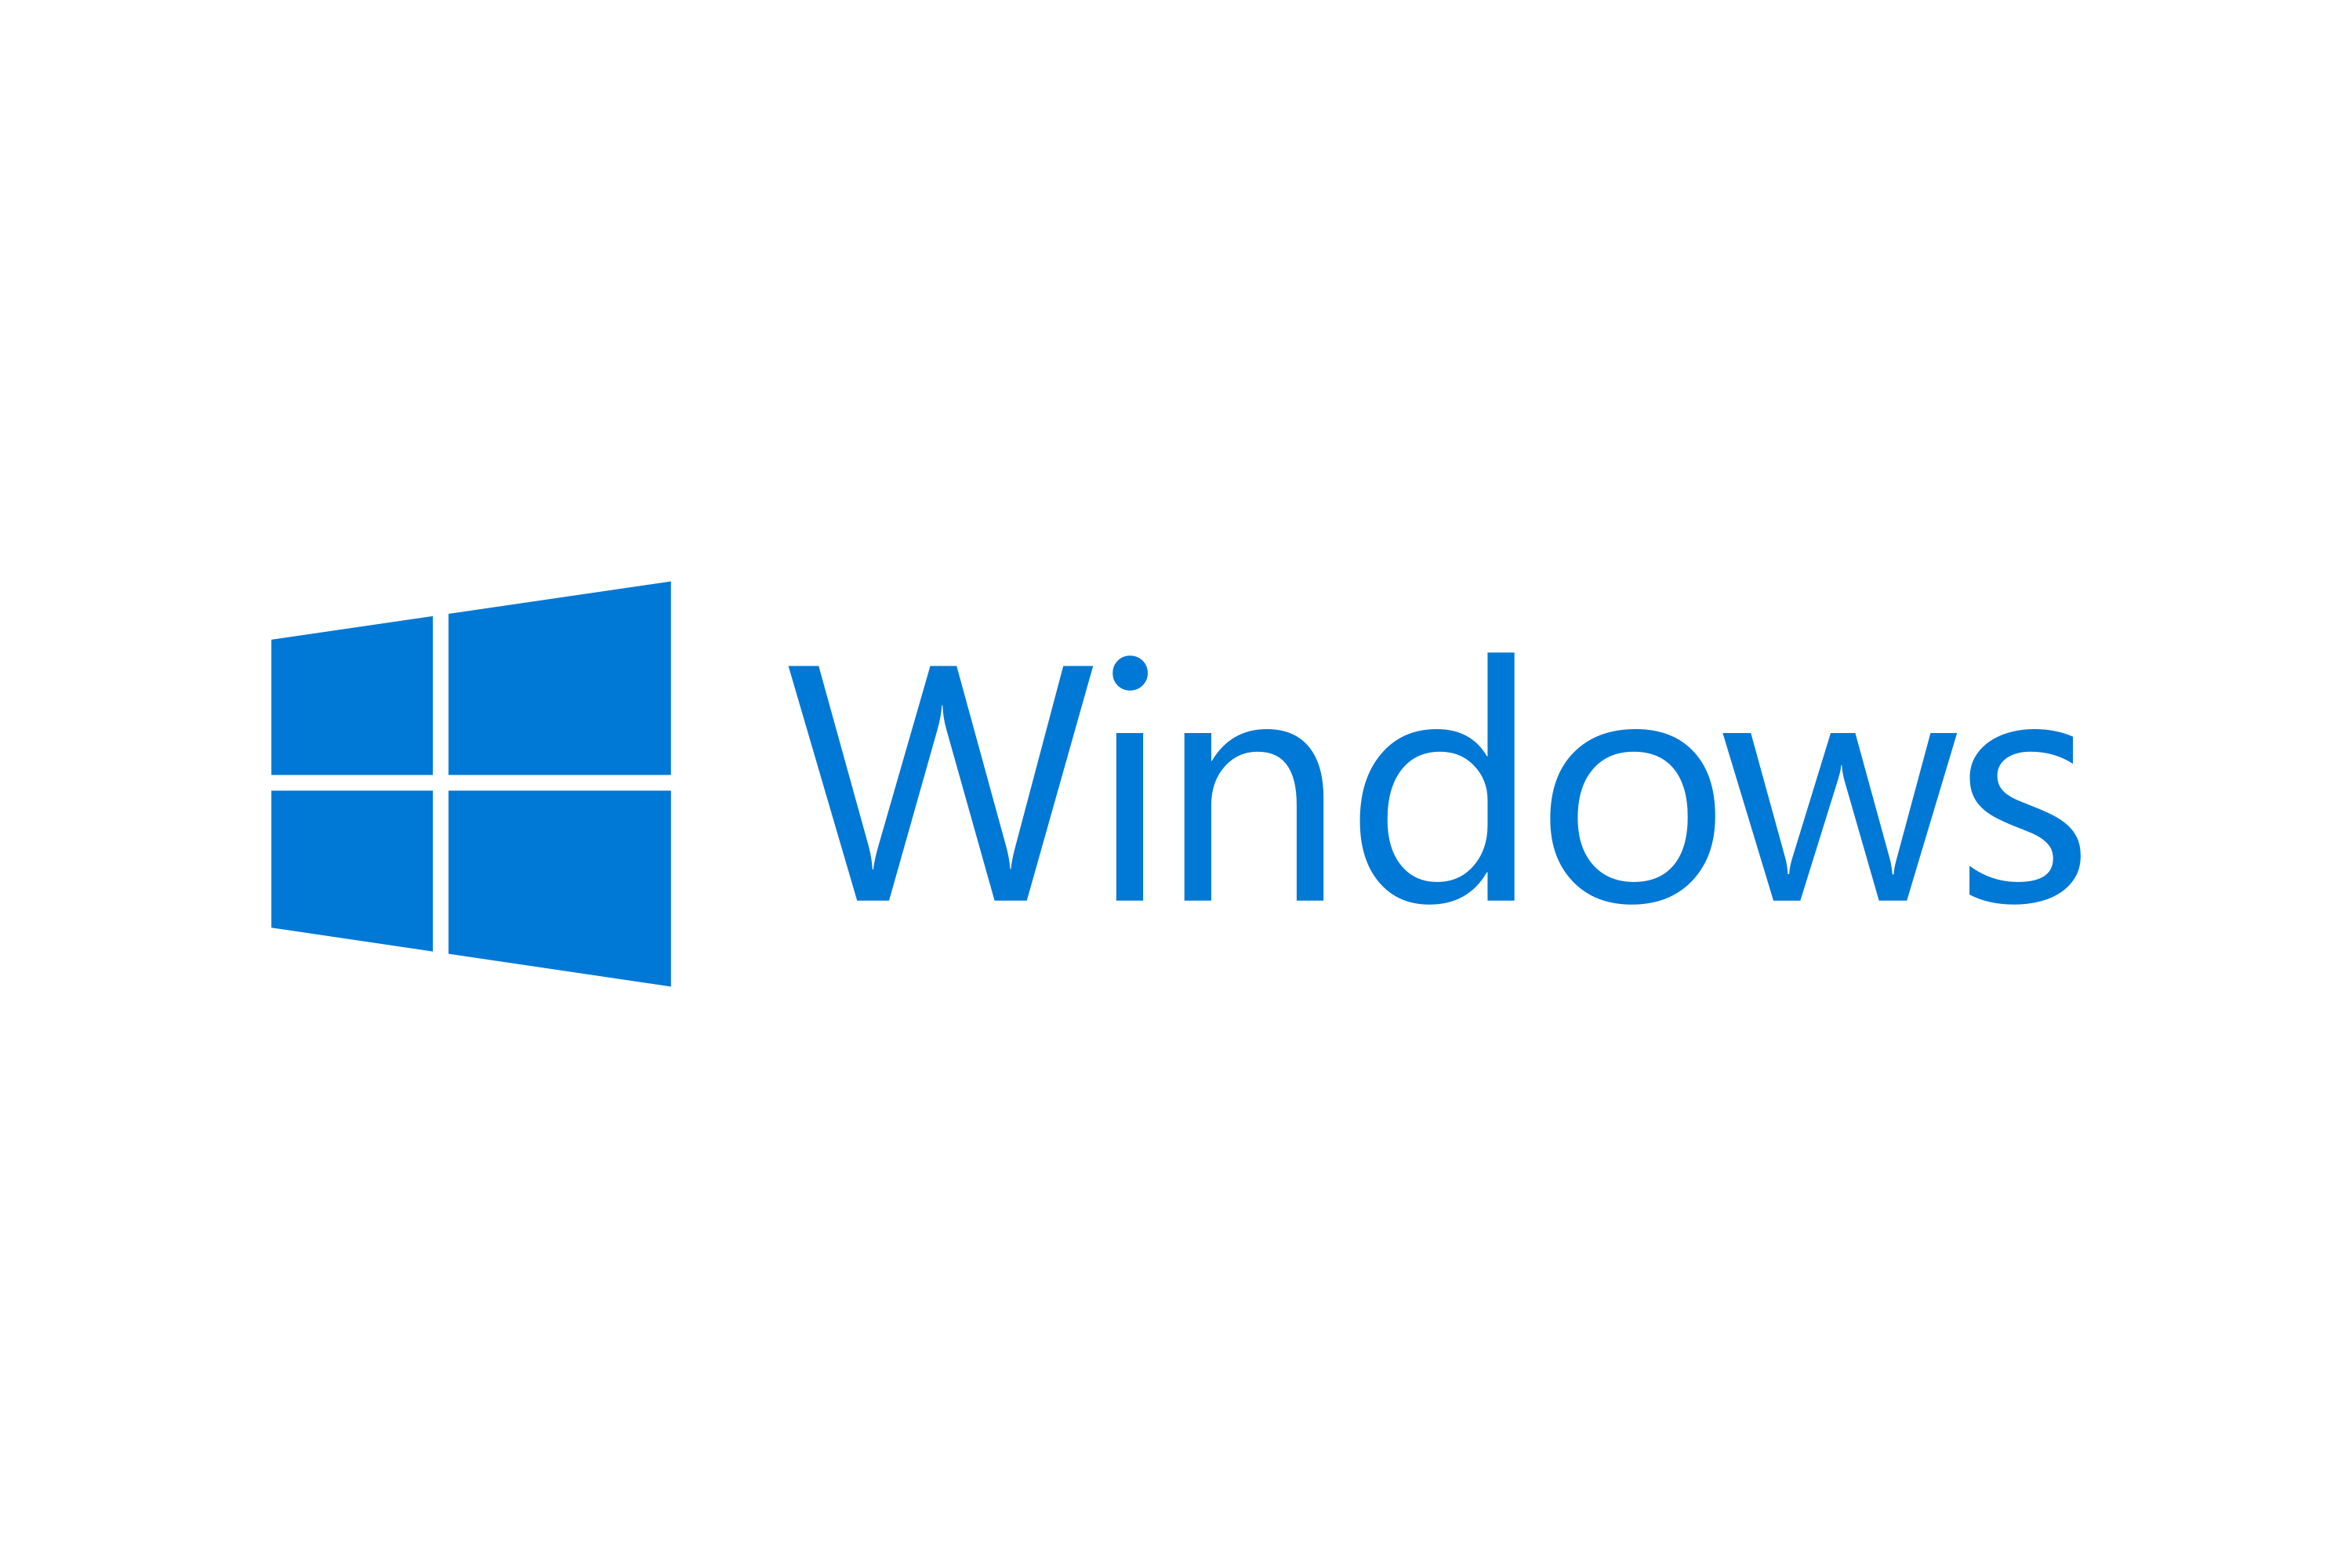 Download Microsoft Windows Logo in SVG Vector or PNG File Format - Logo.wine